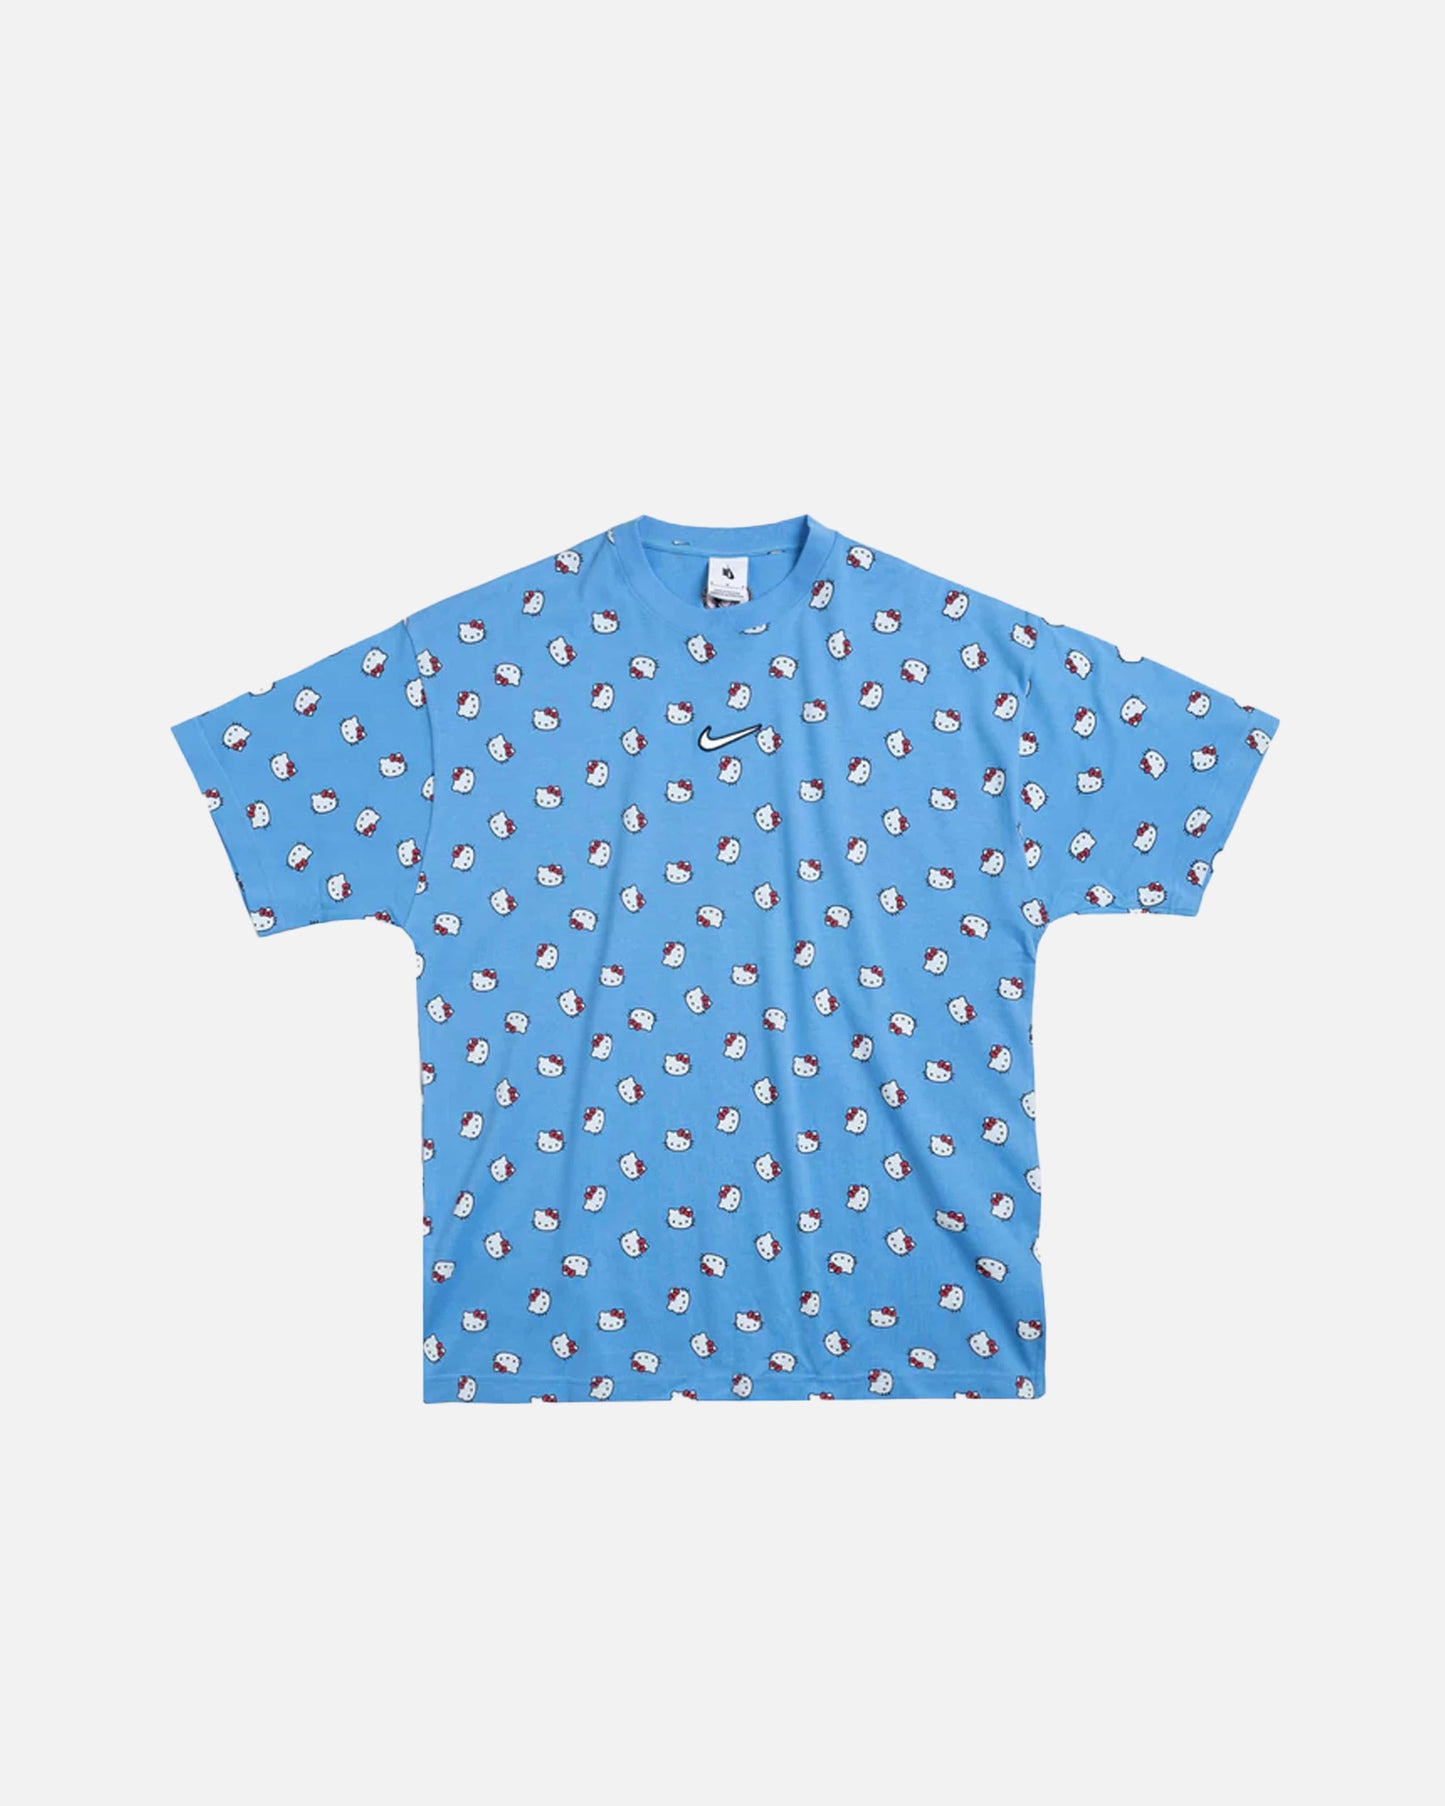 SVRN Men's T-Shirts Hello Kitty NRG T-Shirt in Blue